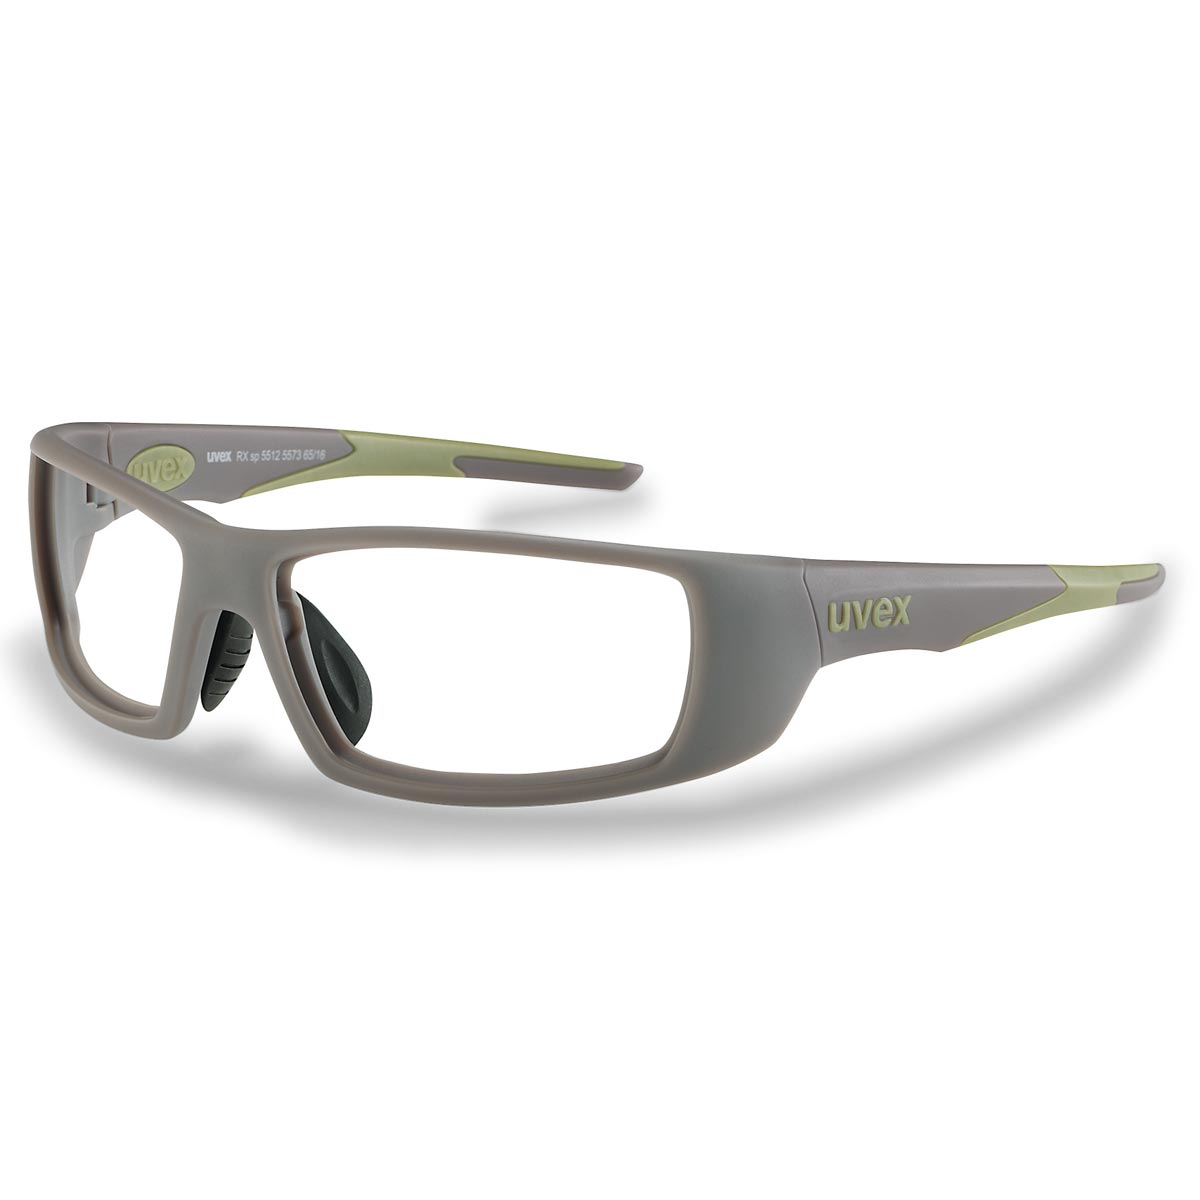 Uvex prescription safety glasses RX sp 5512 green